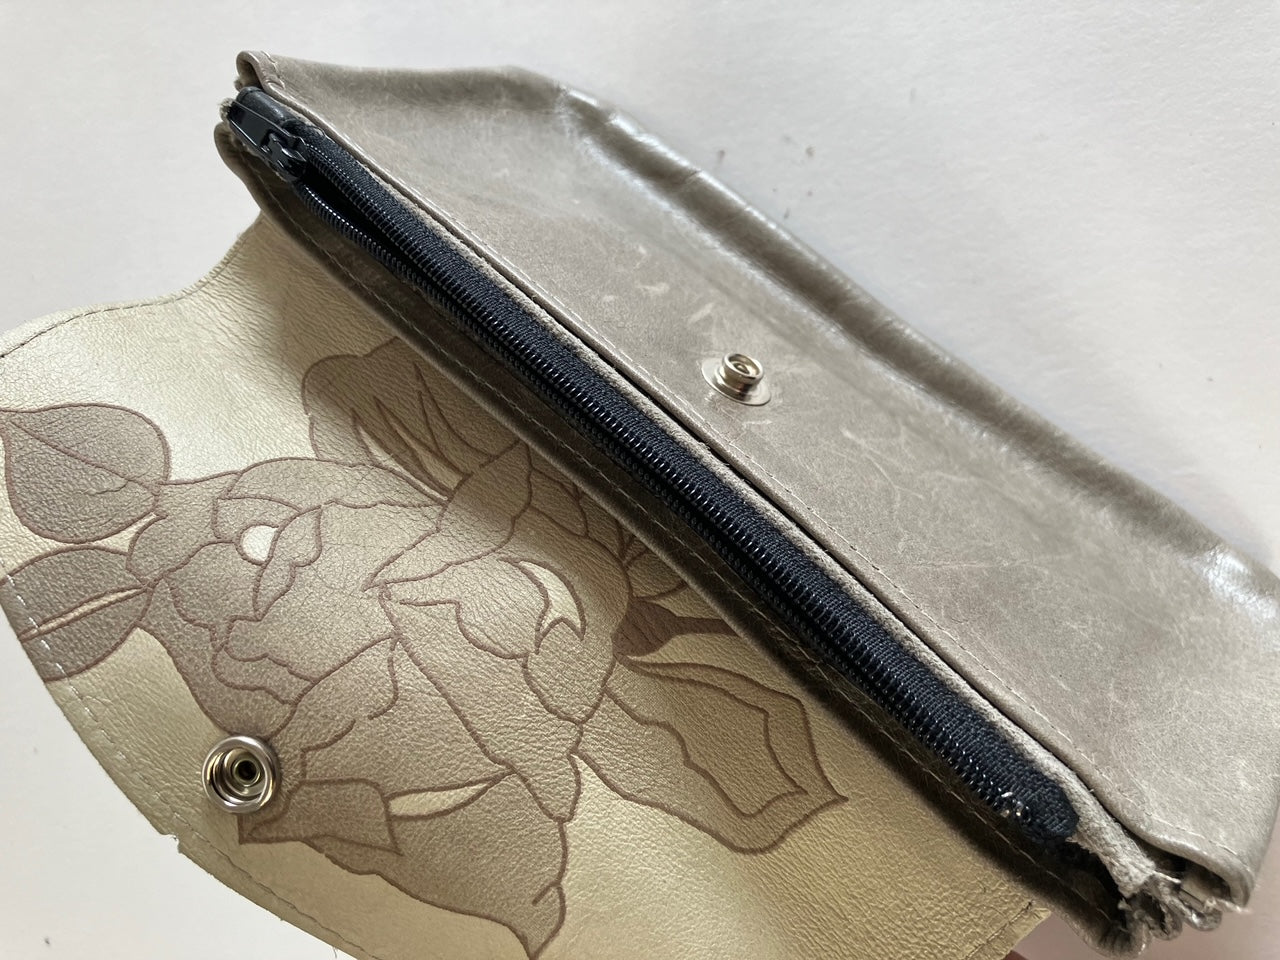 SAMPLE grey Minimalist leather wallet